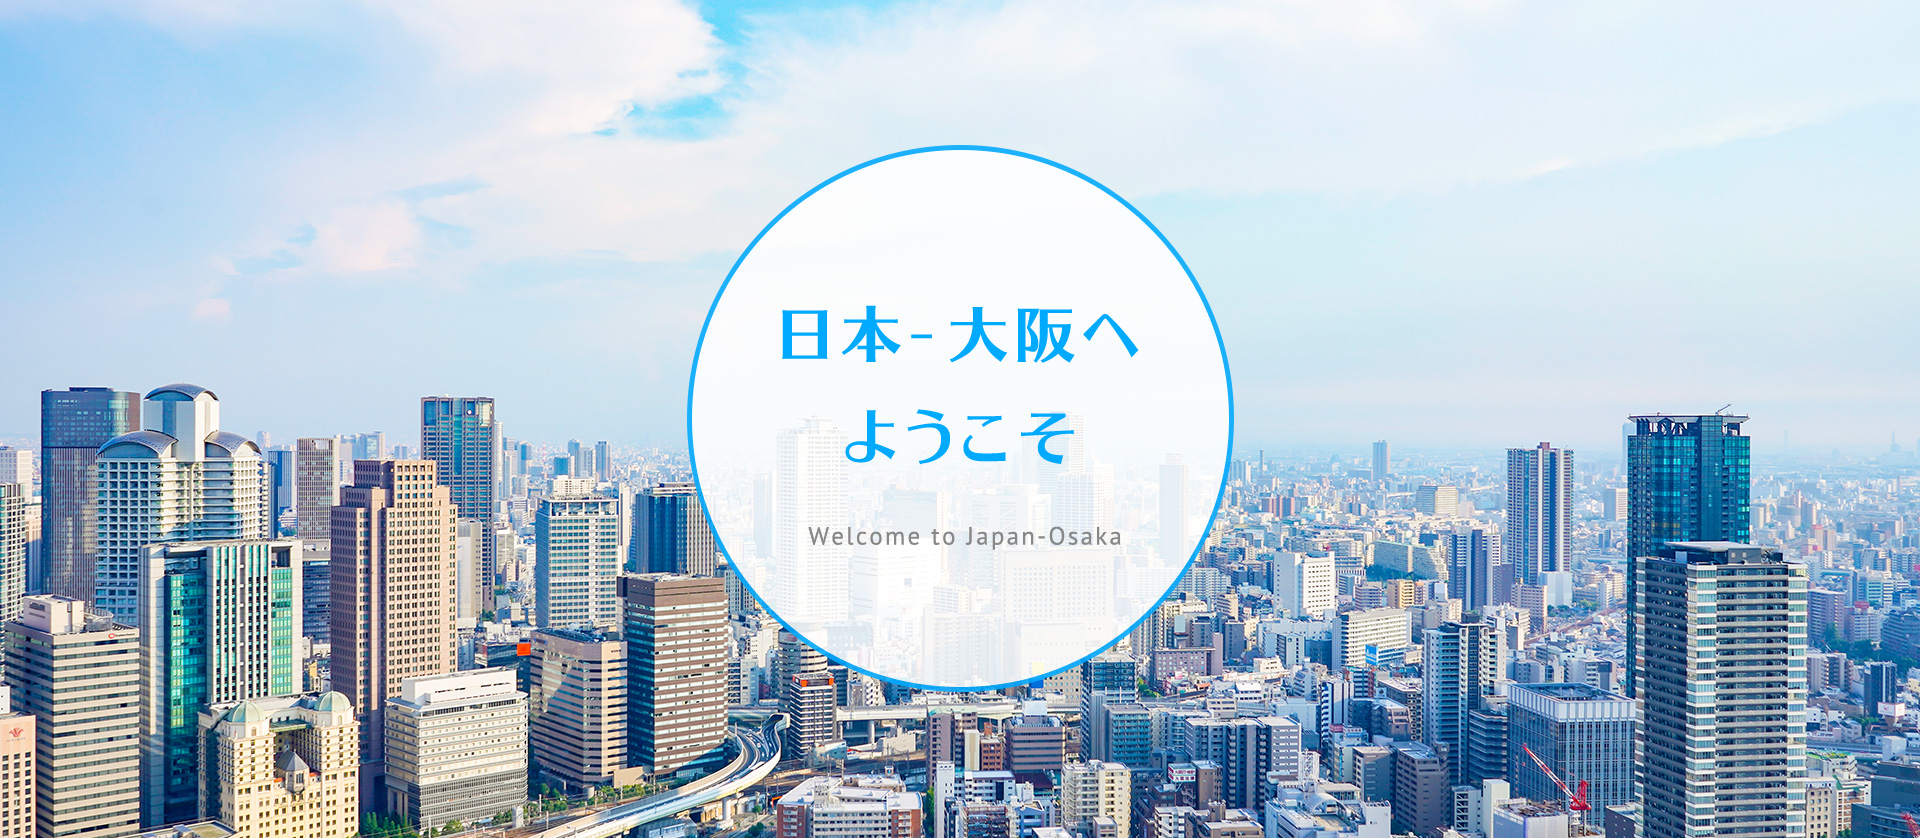 日本 - 大阪へようこそ HOAN NGHÊNH CHÀO ĐÓN CÁC BẠN ĐẾN OSAKA- NHẬT BẢNWelcome to Japan-Osaka